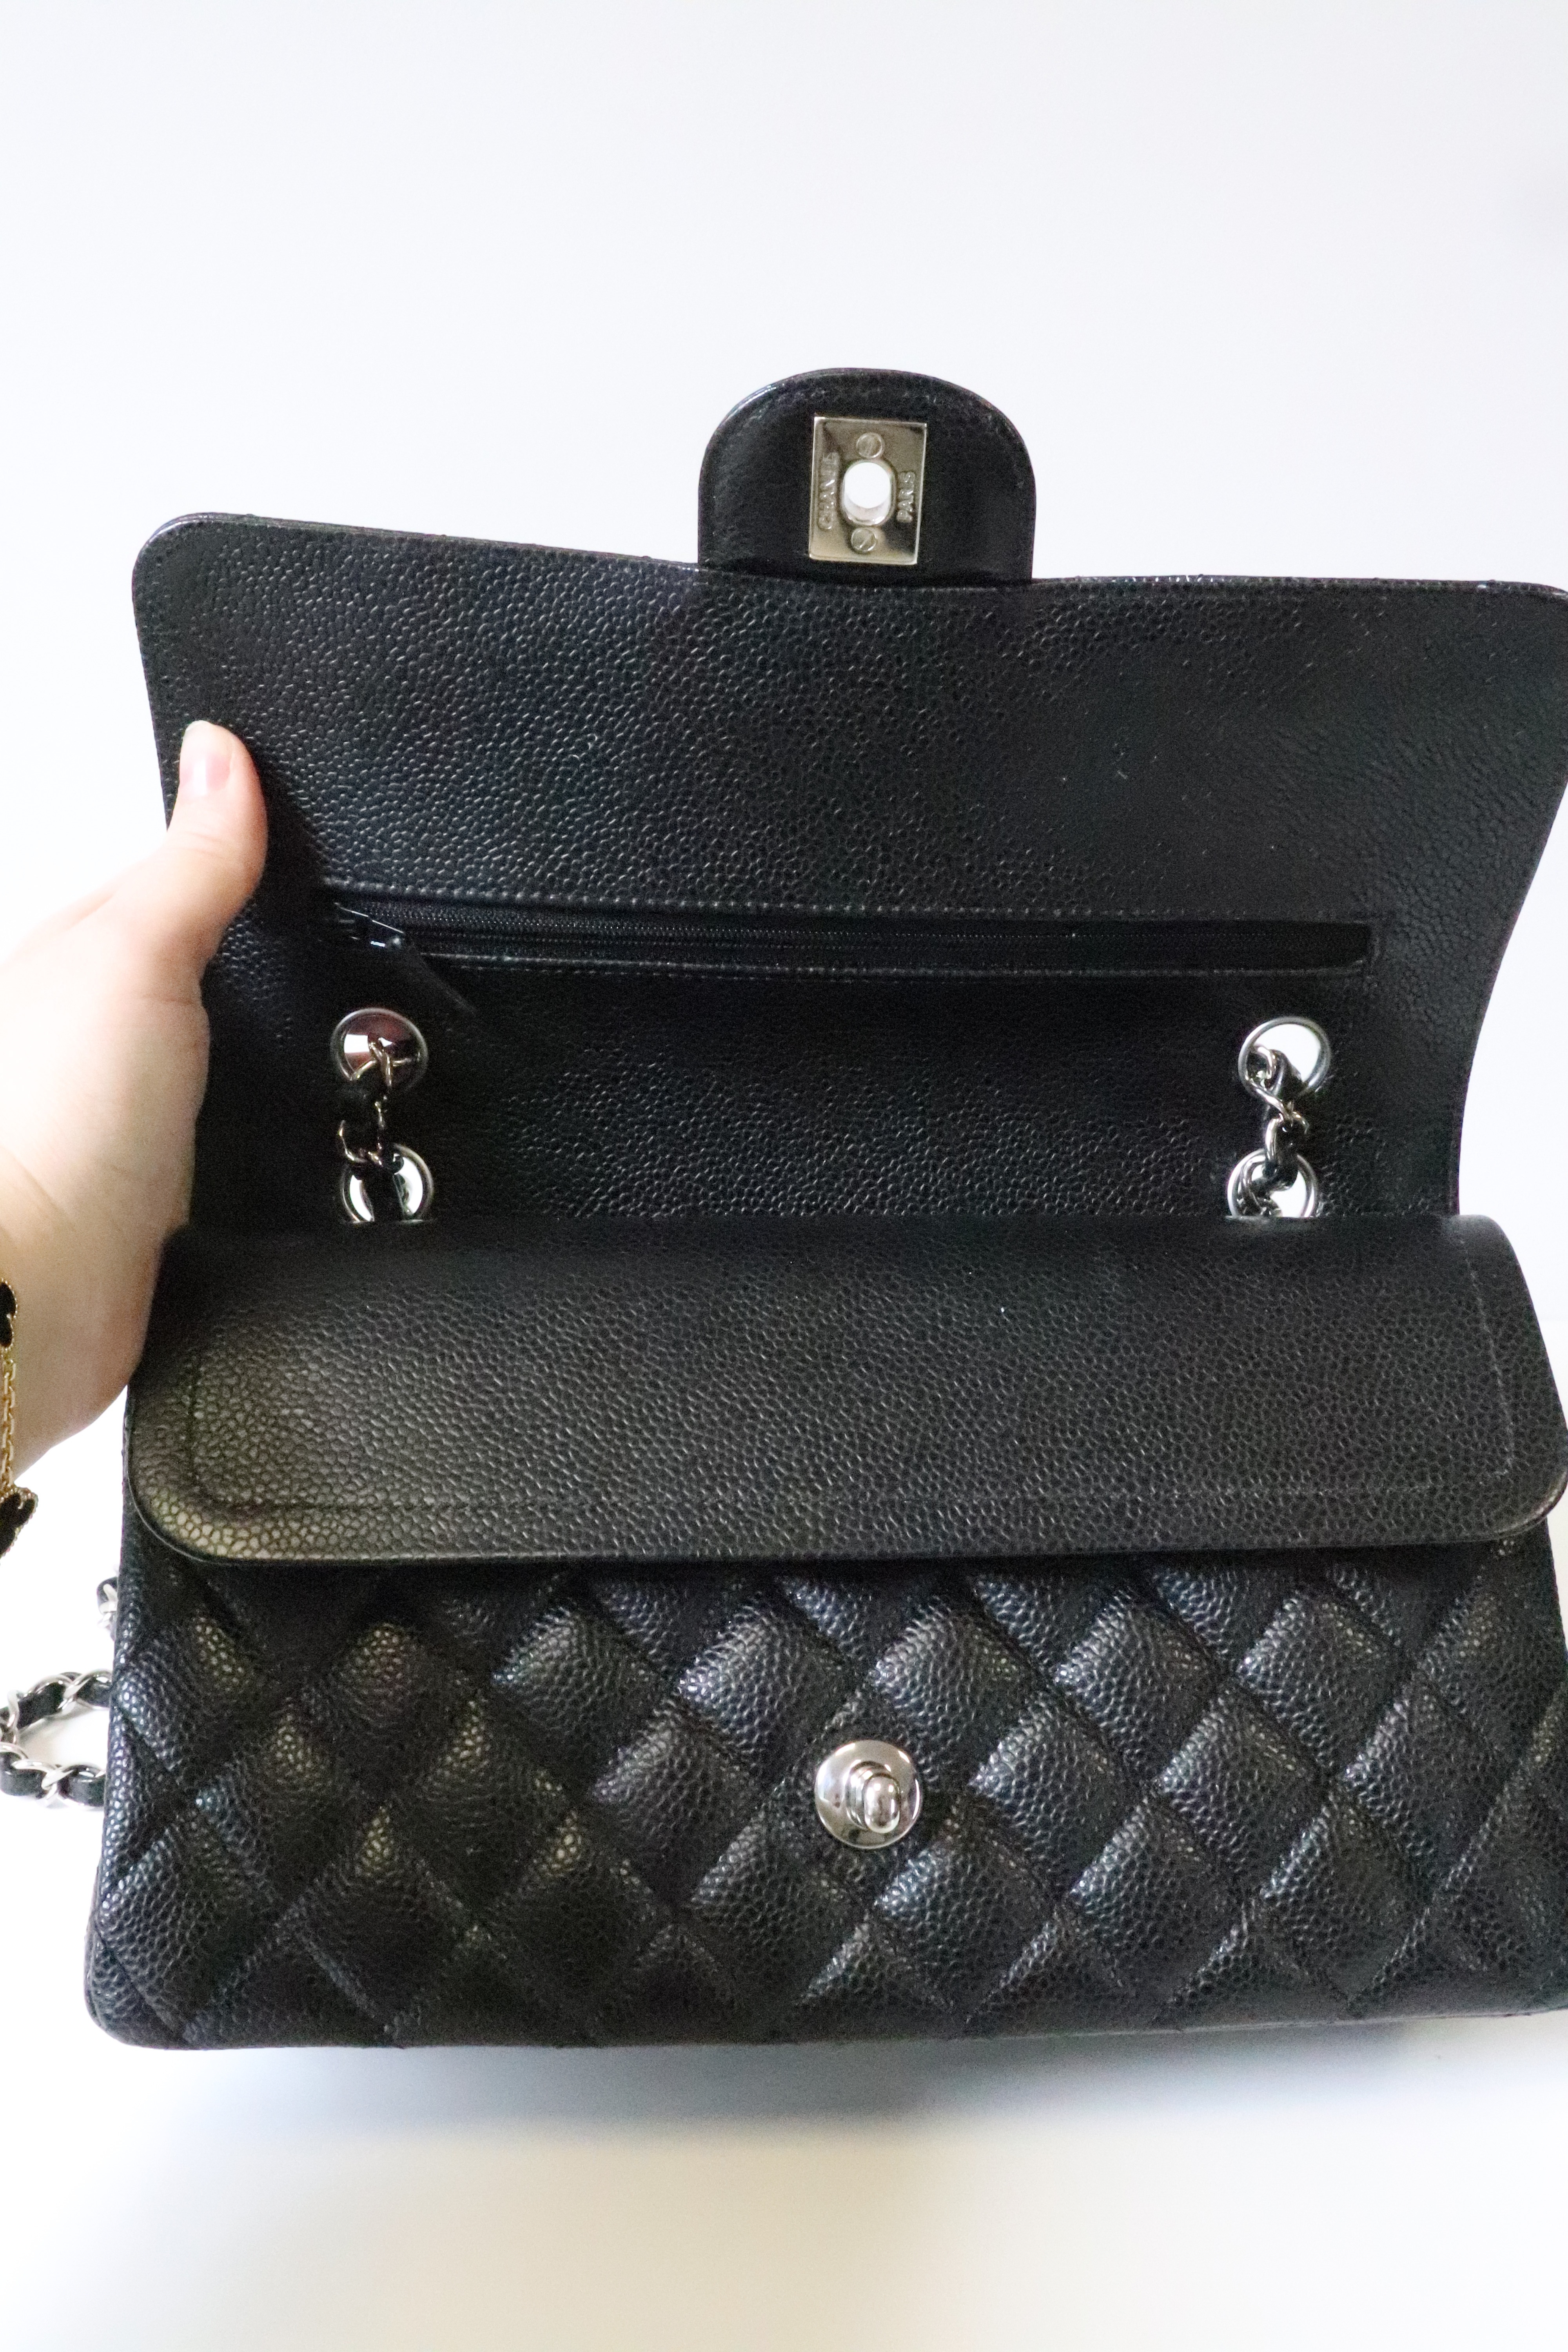 Chanel Classic Medium Double Flap, Black Caviar Leather, Silver Hardware,  Preowned in Dustbag - Julia Rose Boston